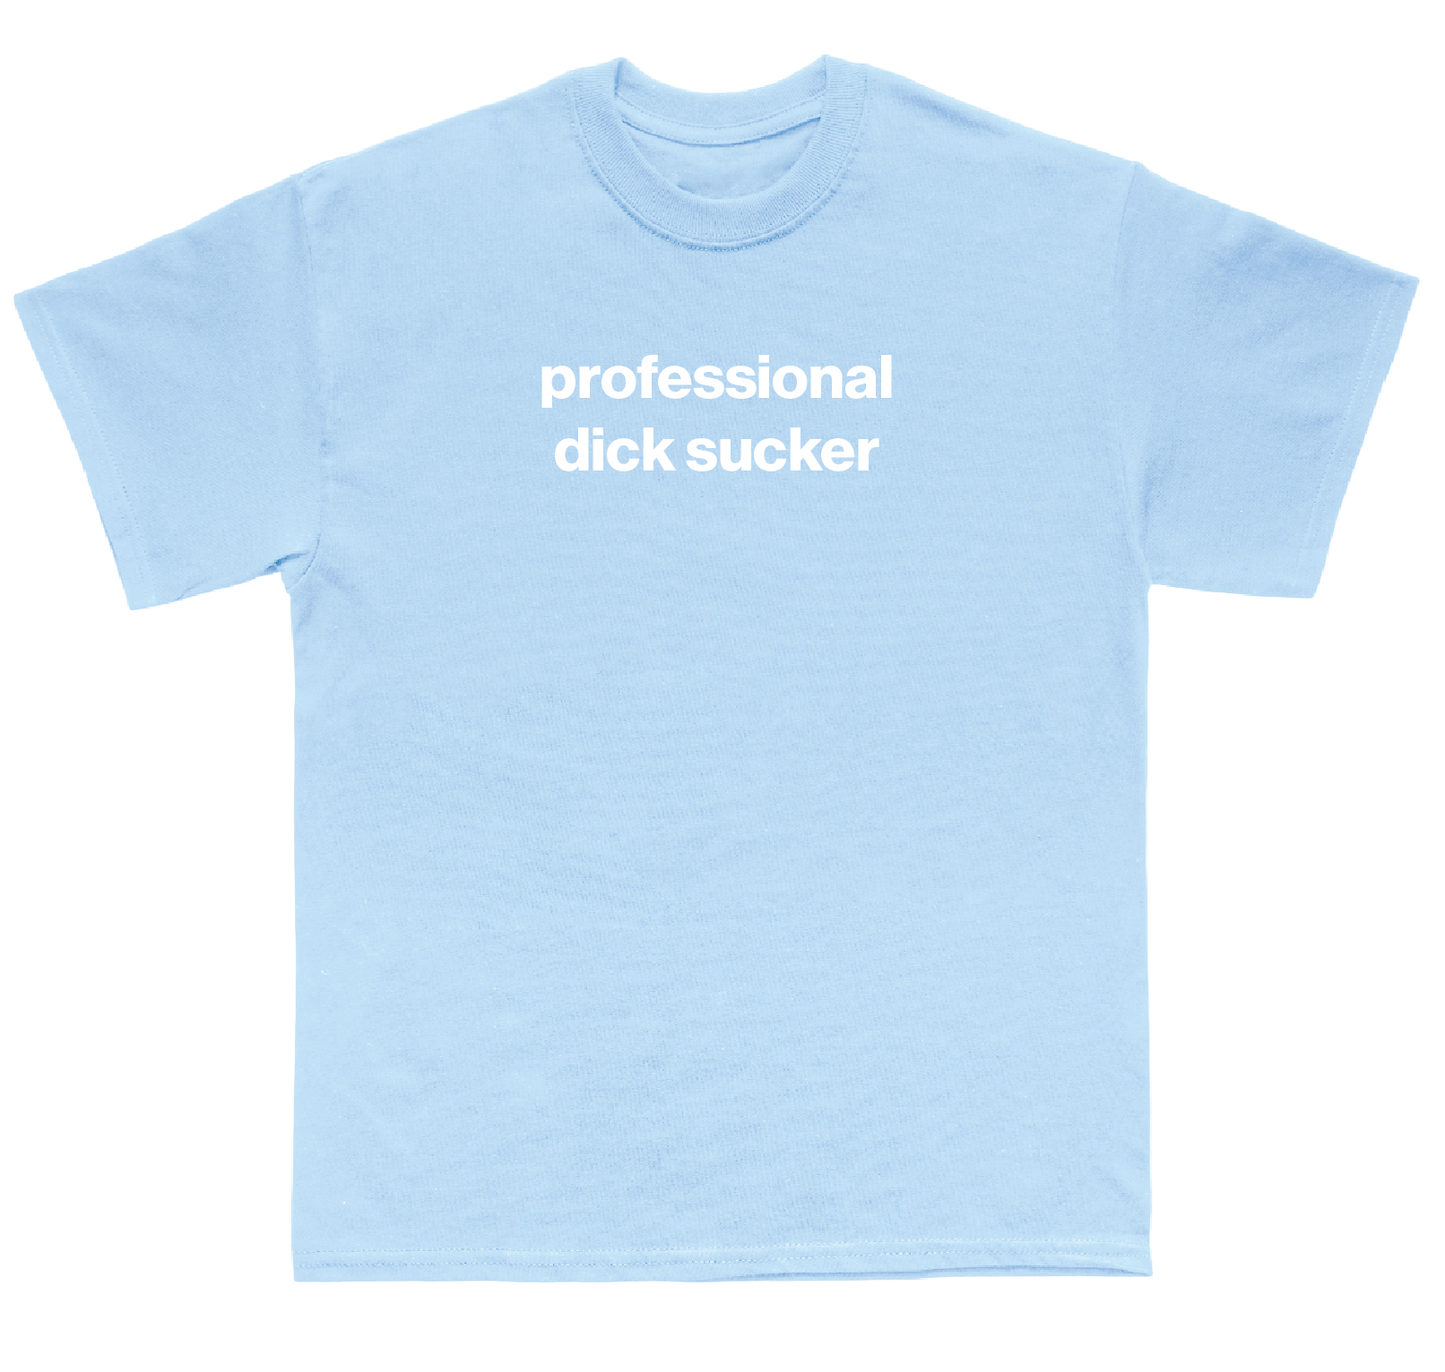 professional dick sucker shirt